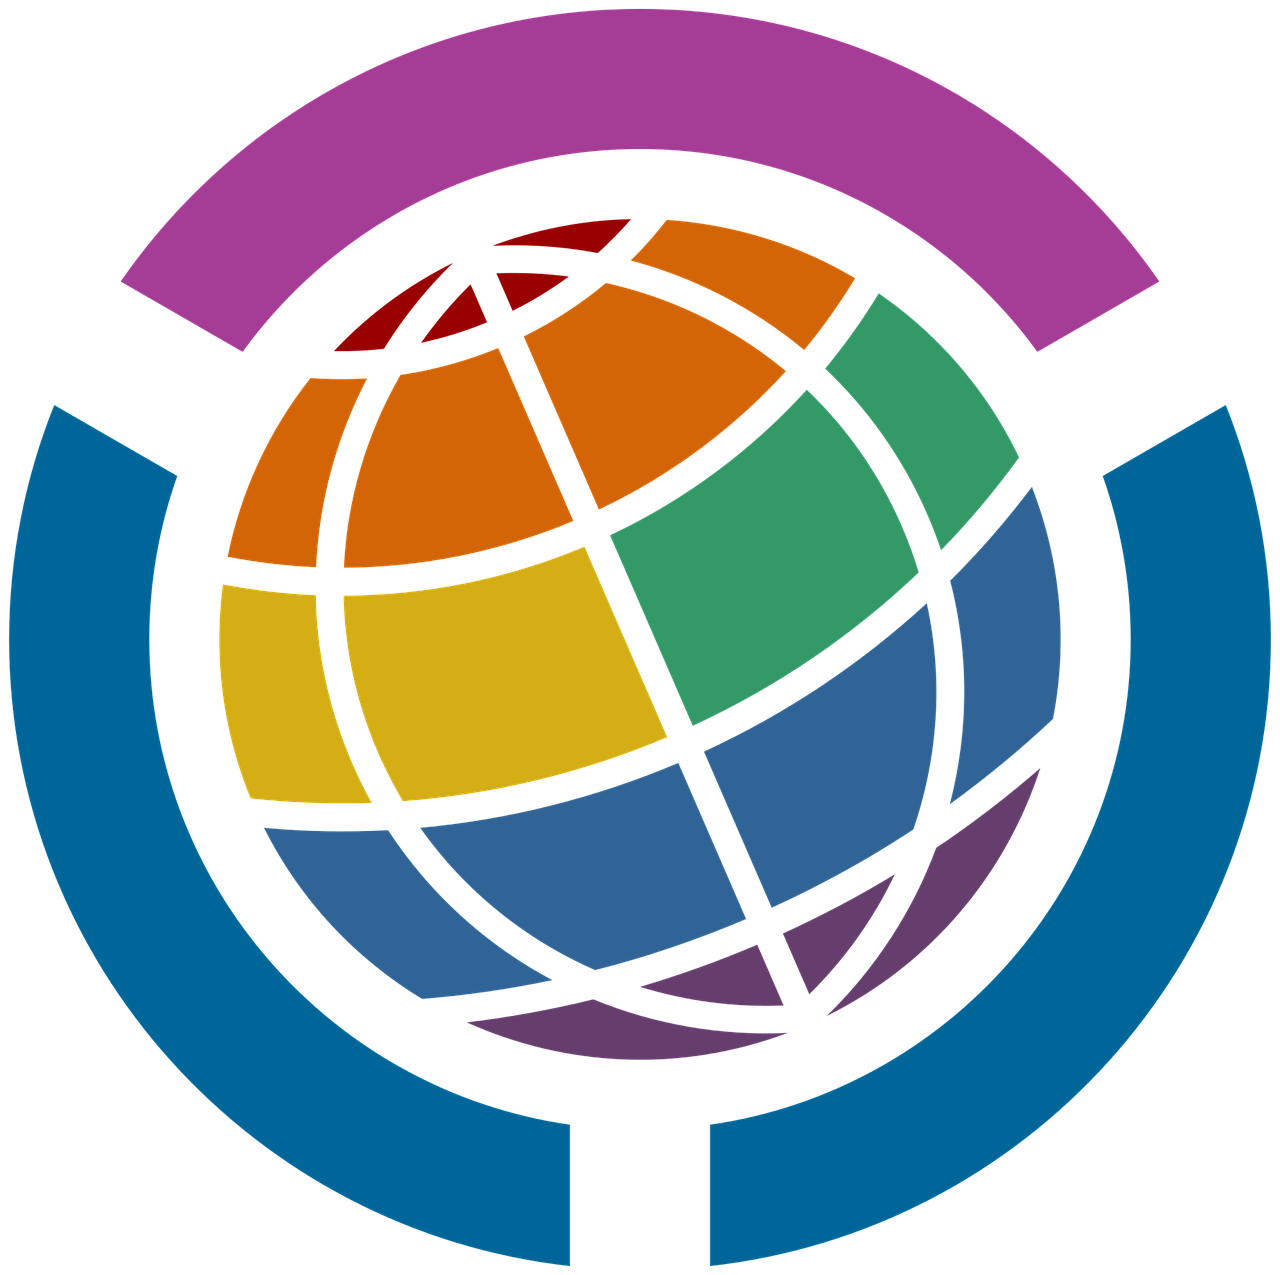 wikimedia community logo lgbt support symbol free photo